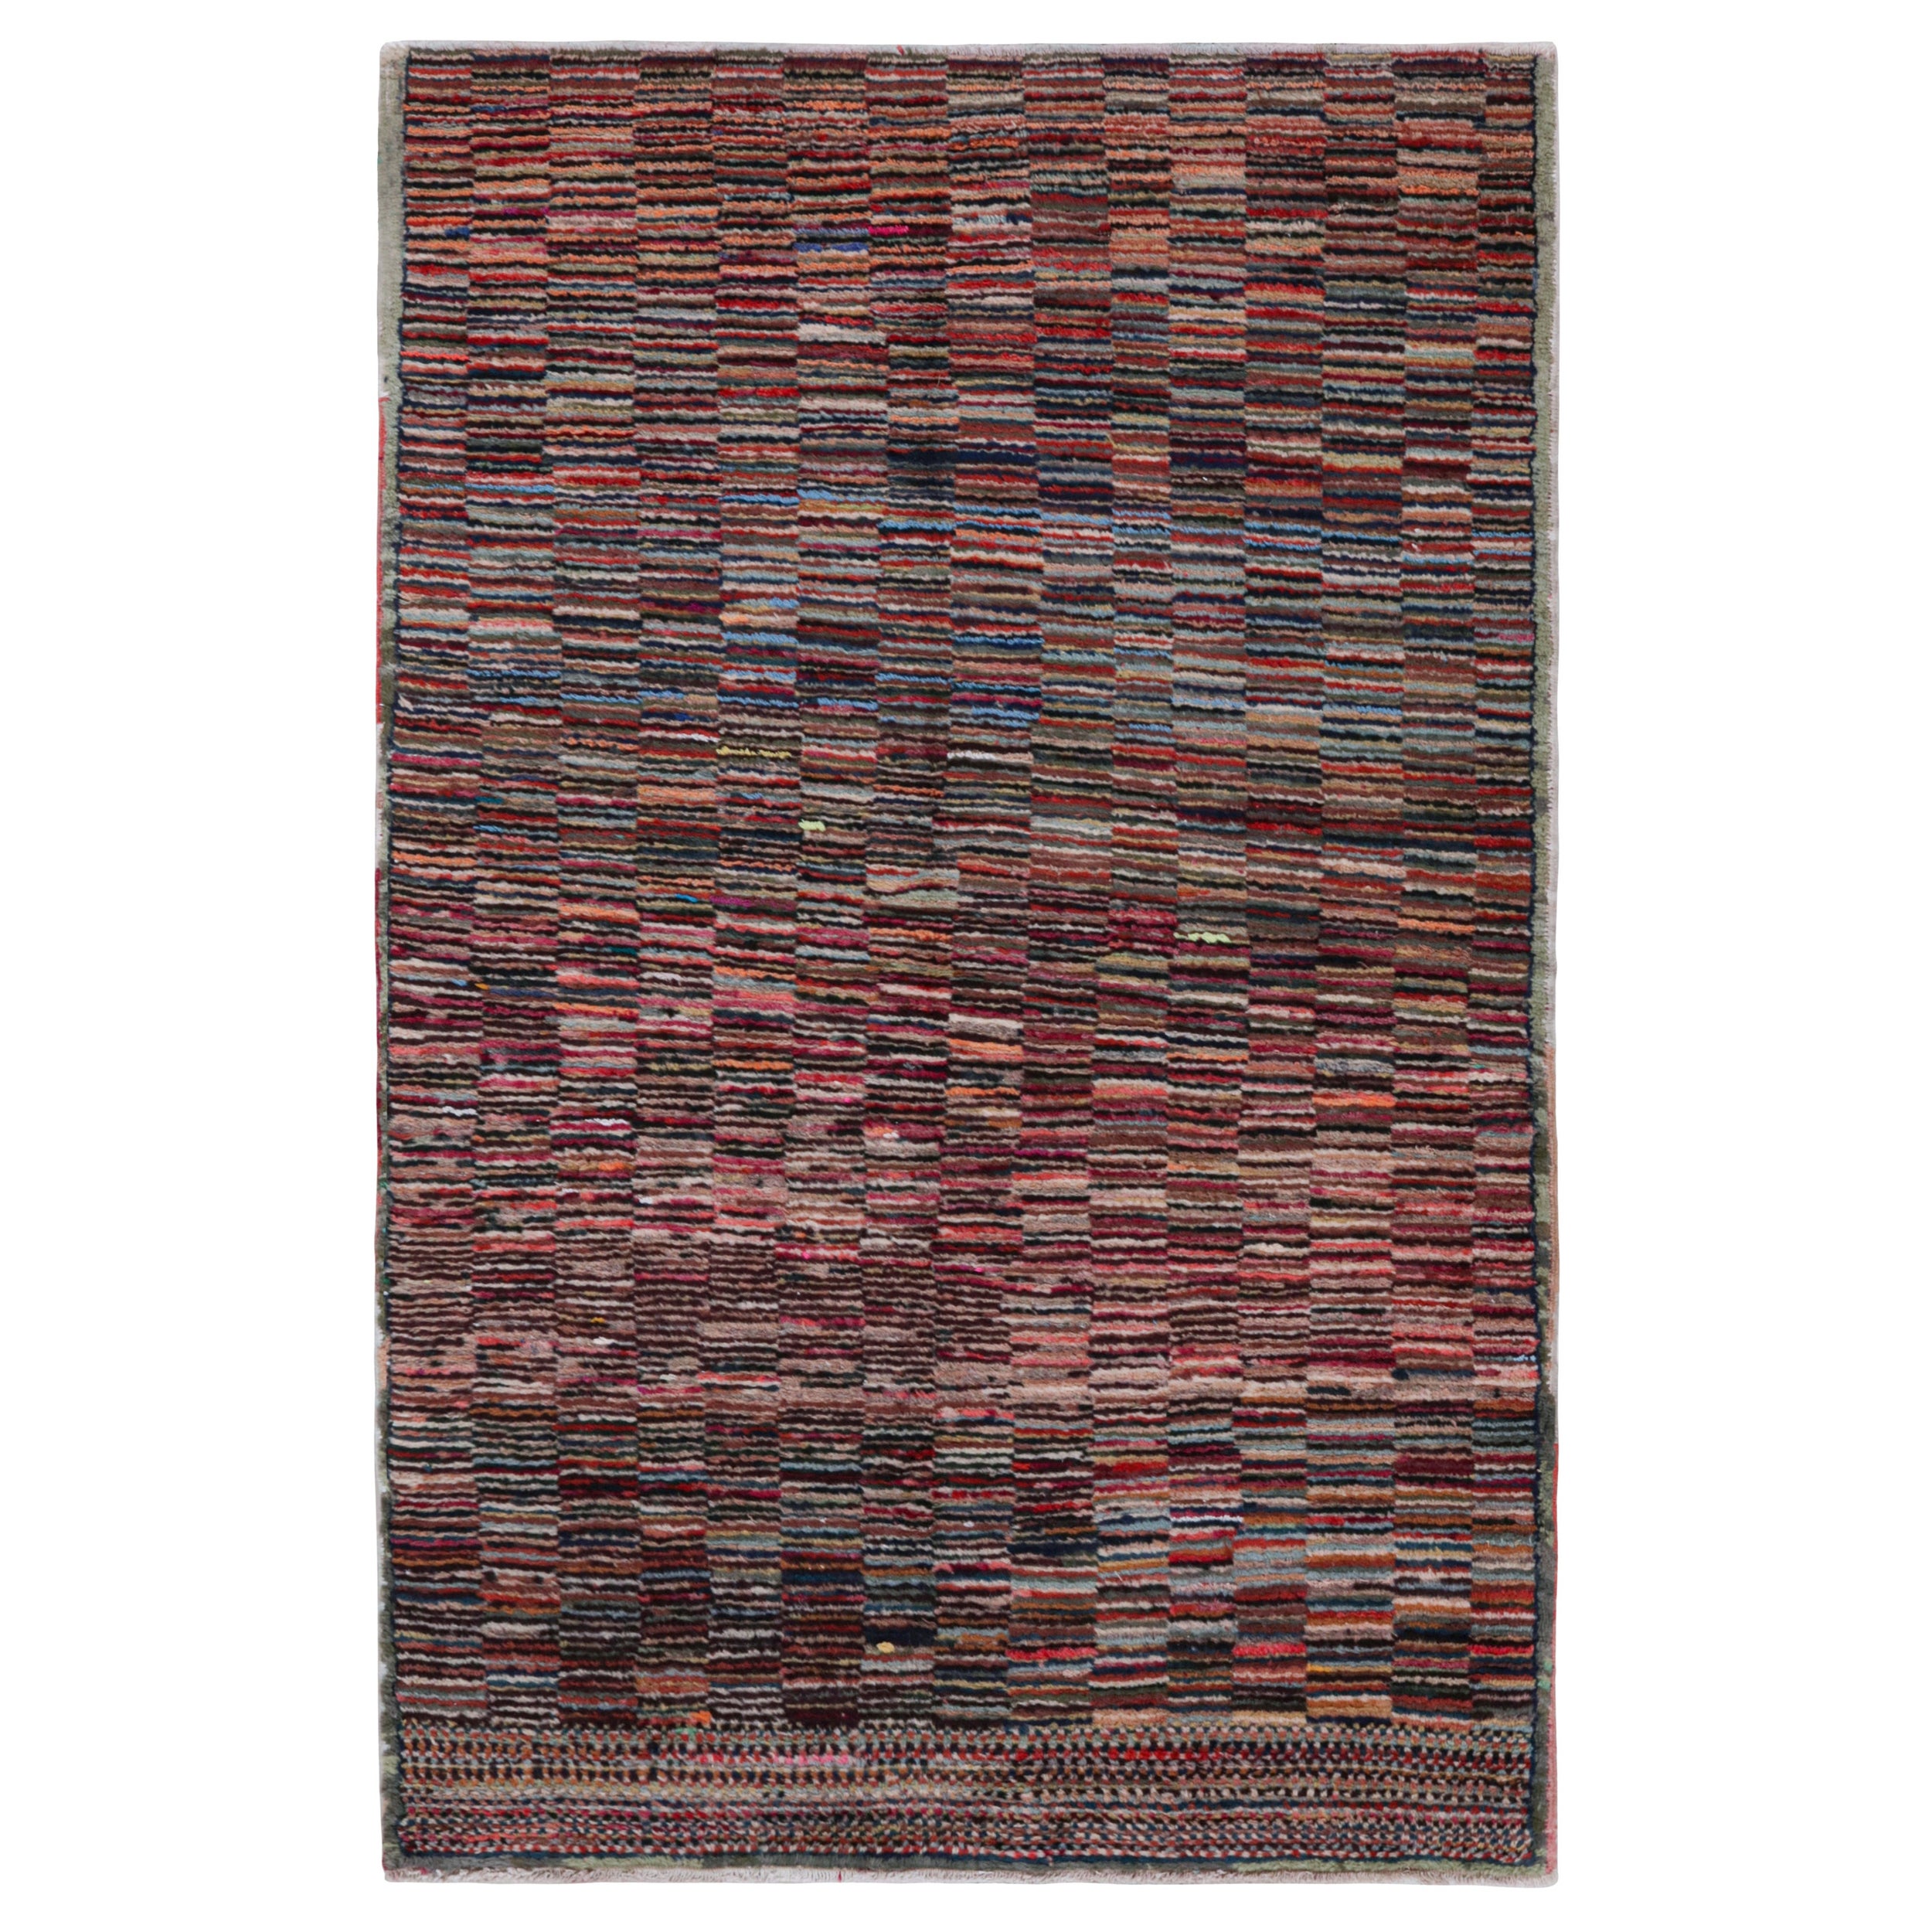 Vintage Zeki Muren Polychromatic Rug, with Geometric patterns, from Rug & Kilim